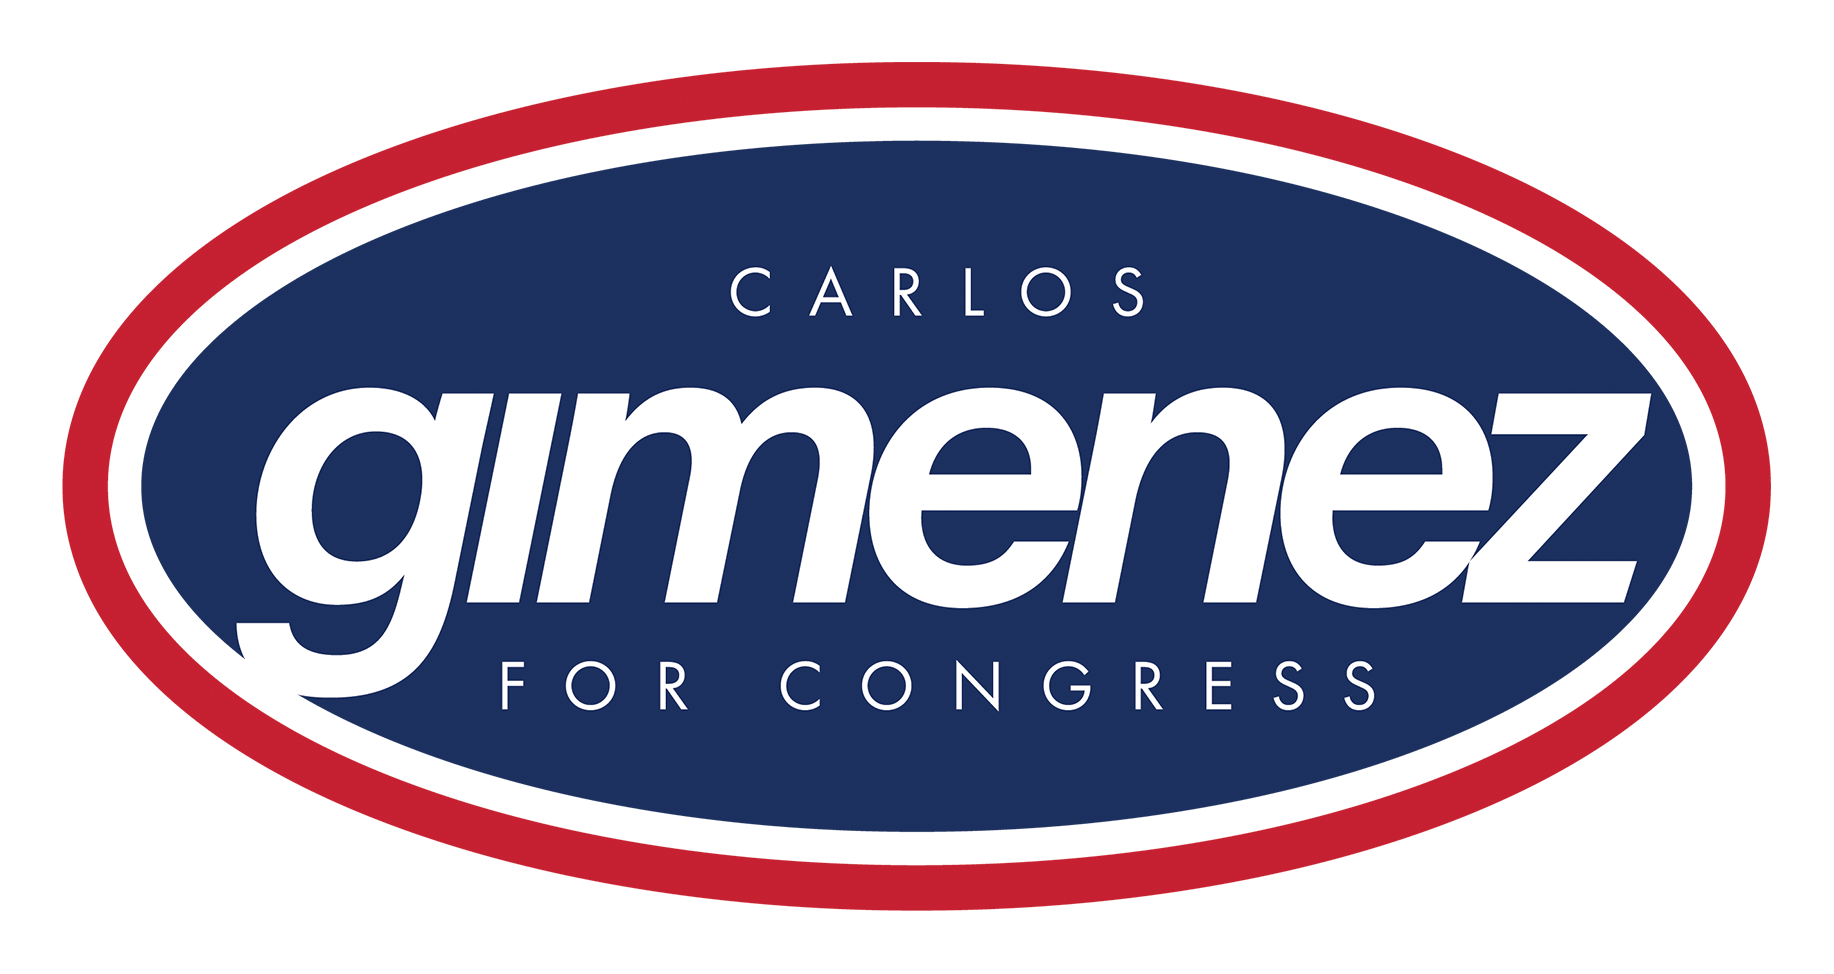 Carlos Gimenez for Congress